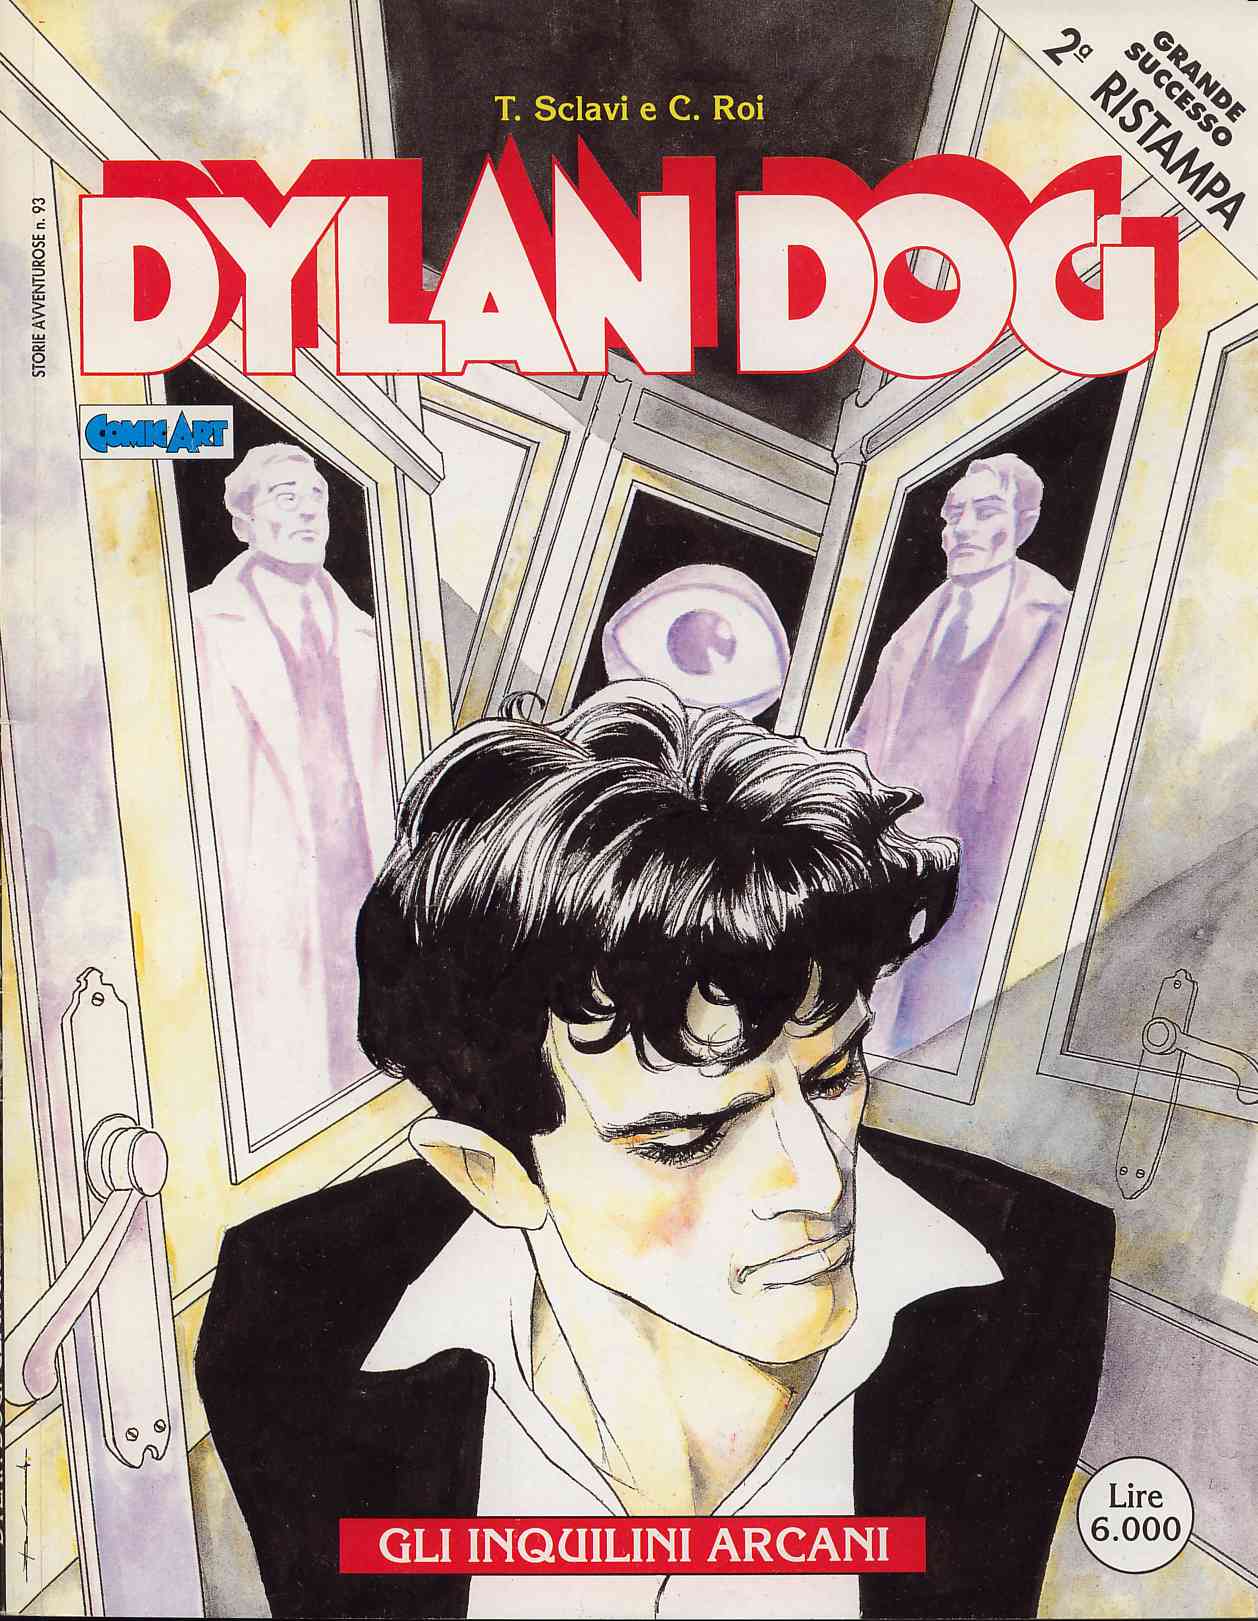 Dylan Dog #9